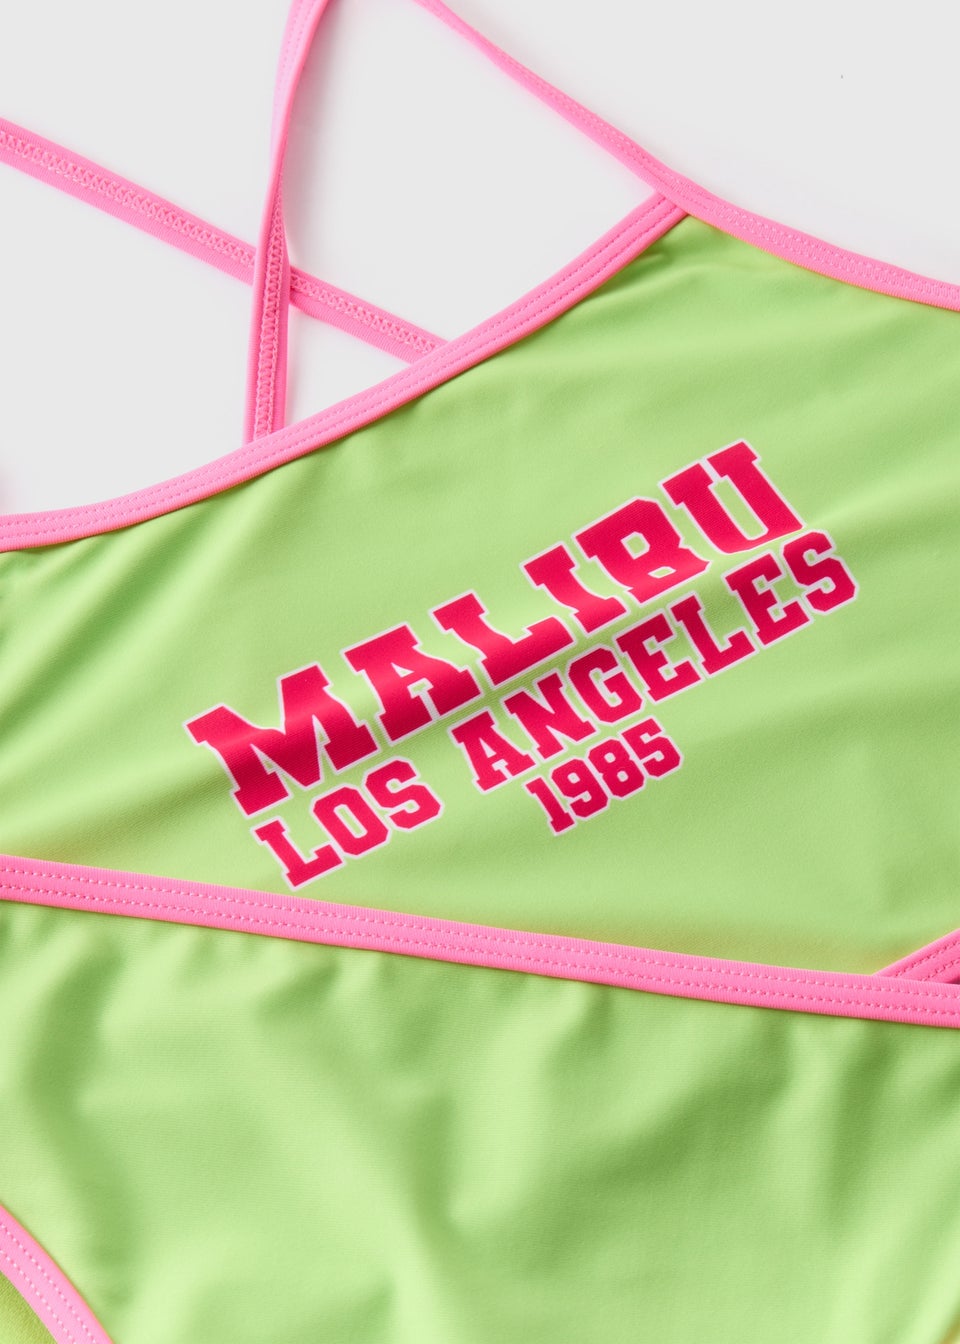 Girls Lime Malibu Slogan Bikini Set (6-15yrs)